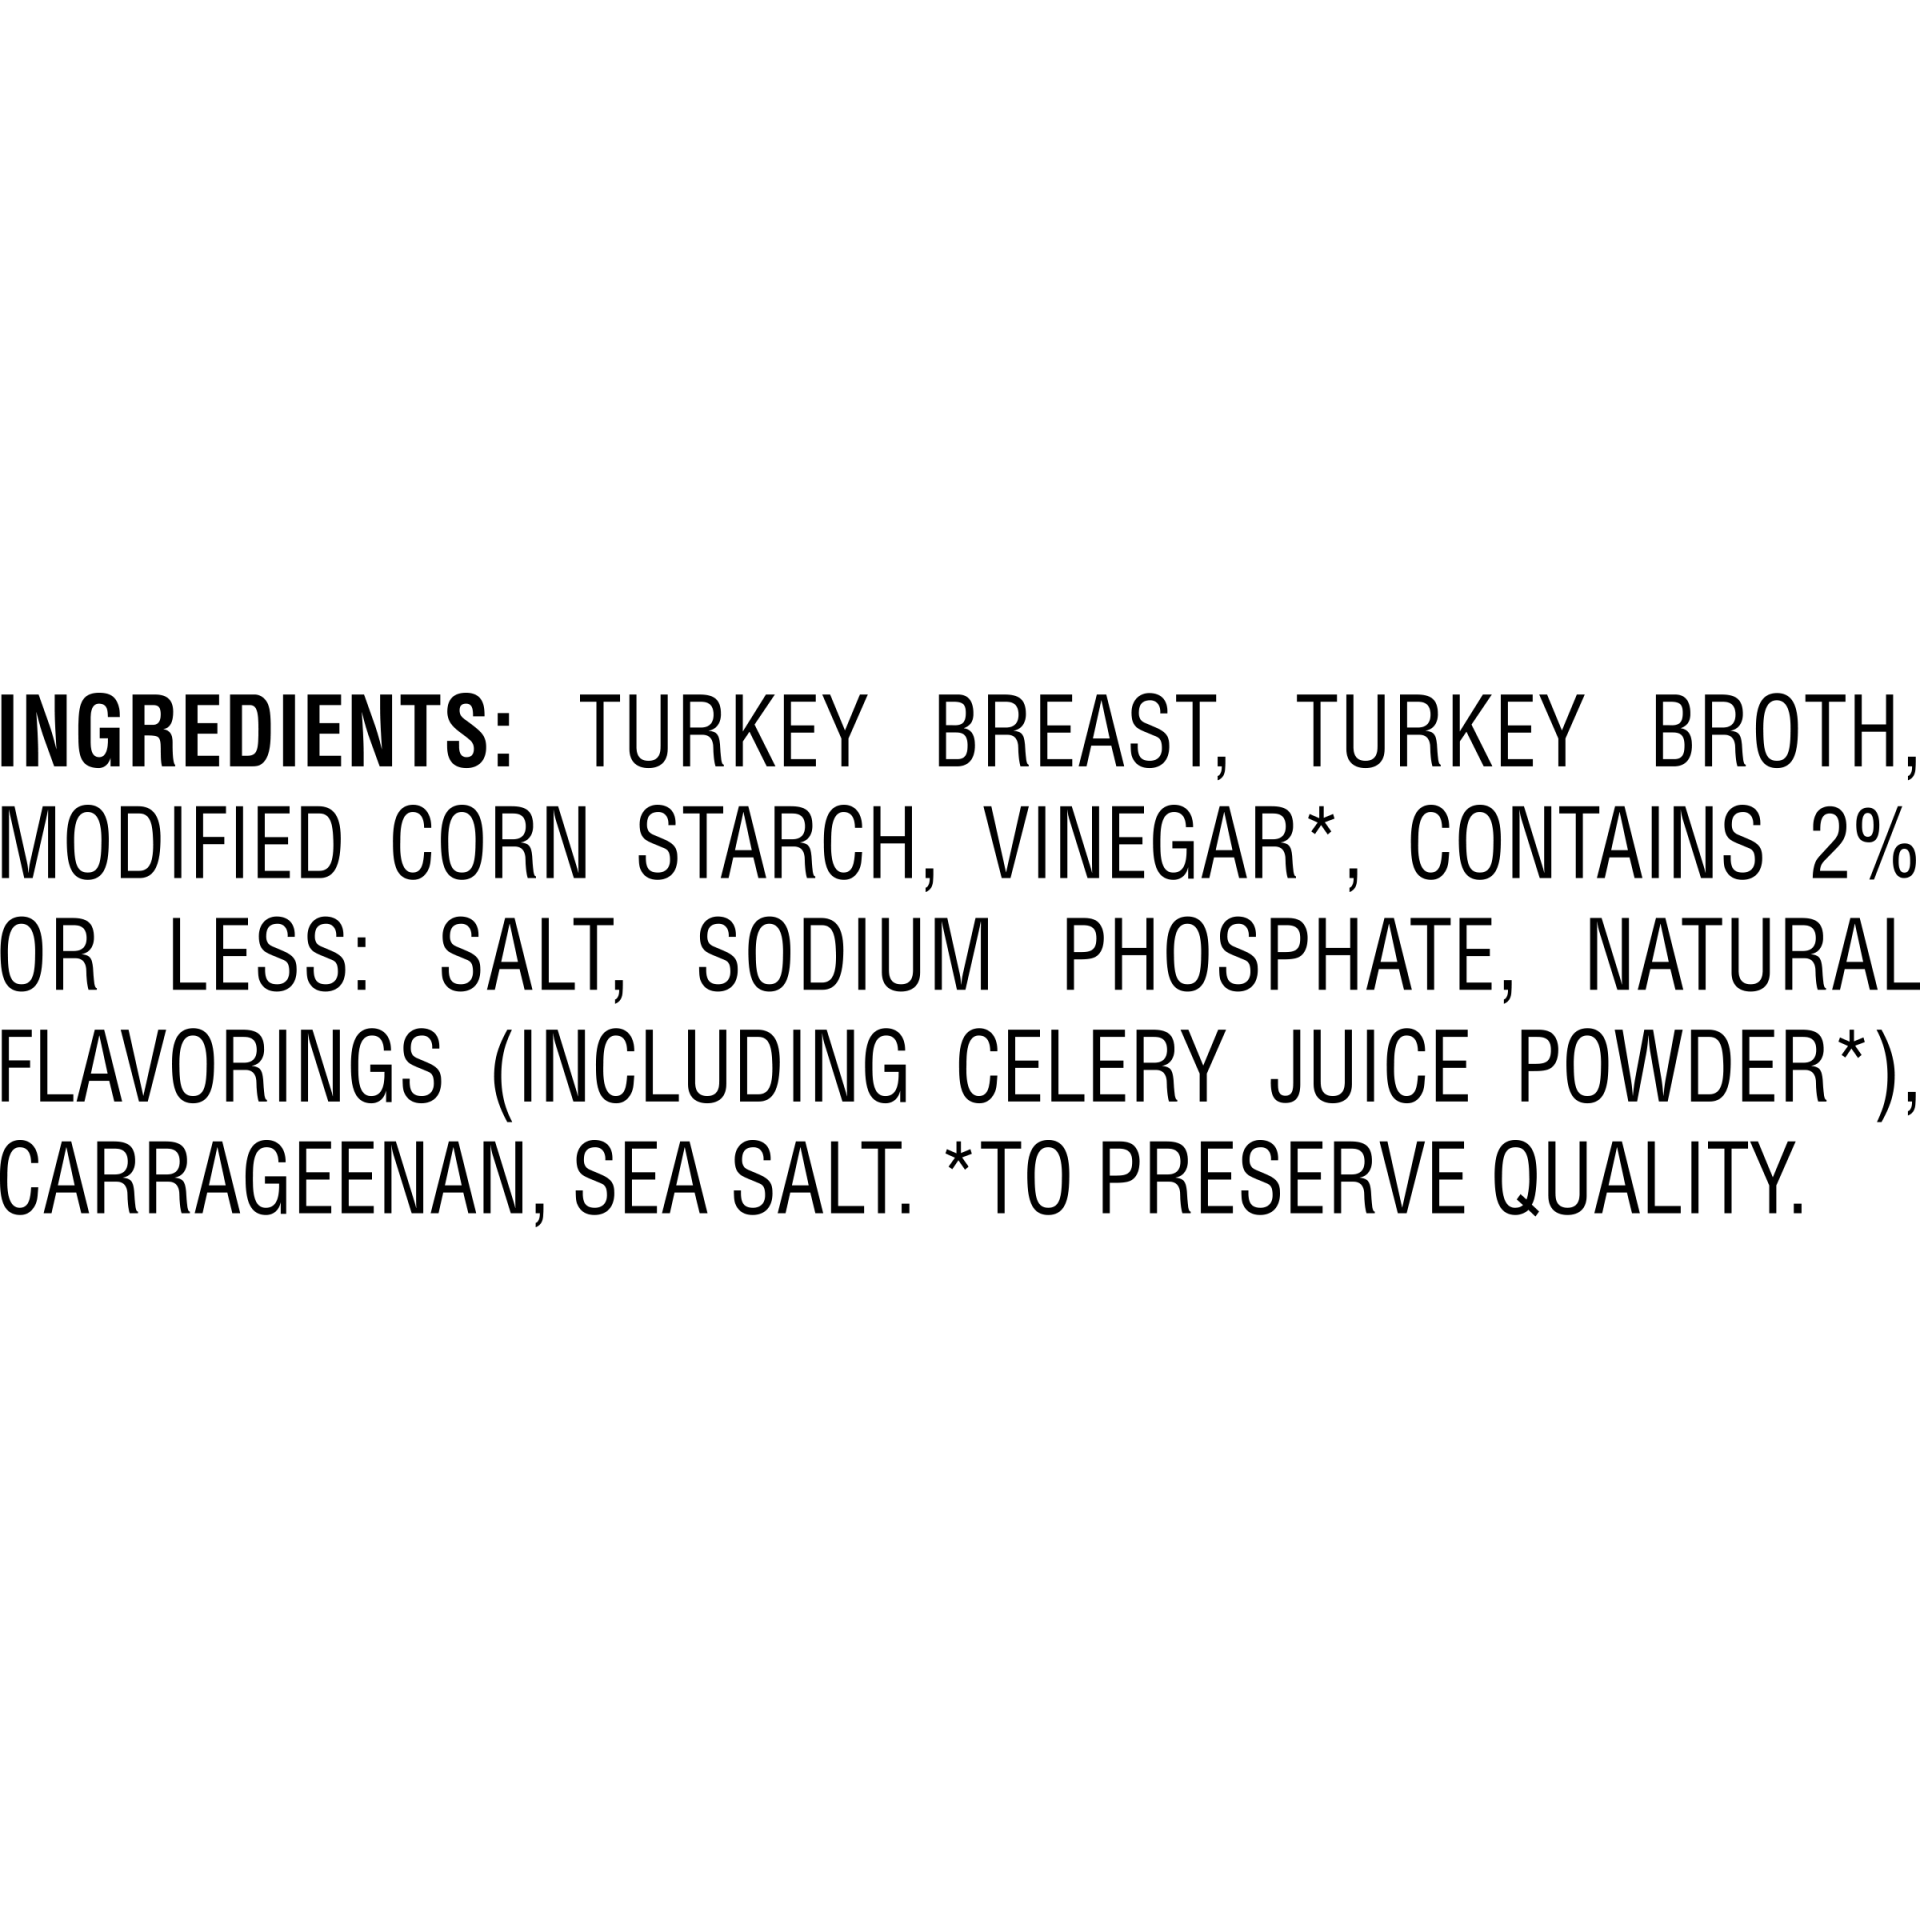 slide 4 of 6, Ultra Thin Deli Sliced Turkey Breast Lunchmeat Oven Roasted Turkey Breast, 16 oz